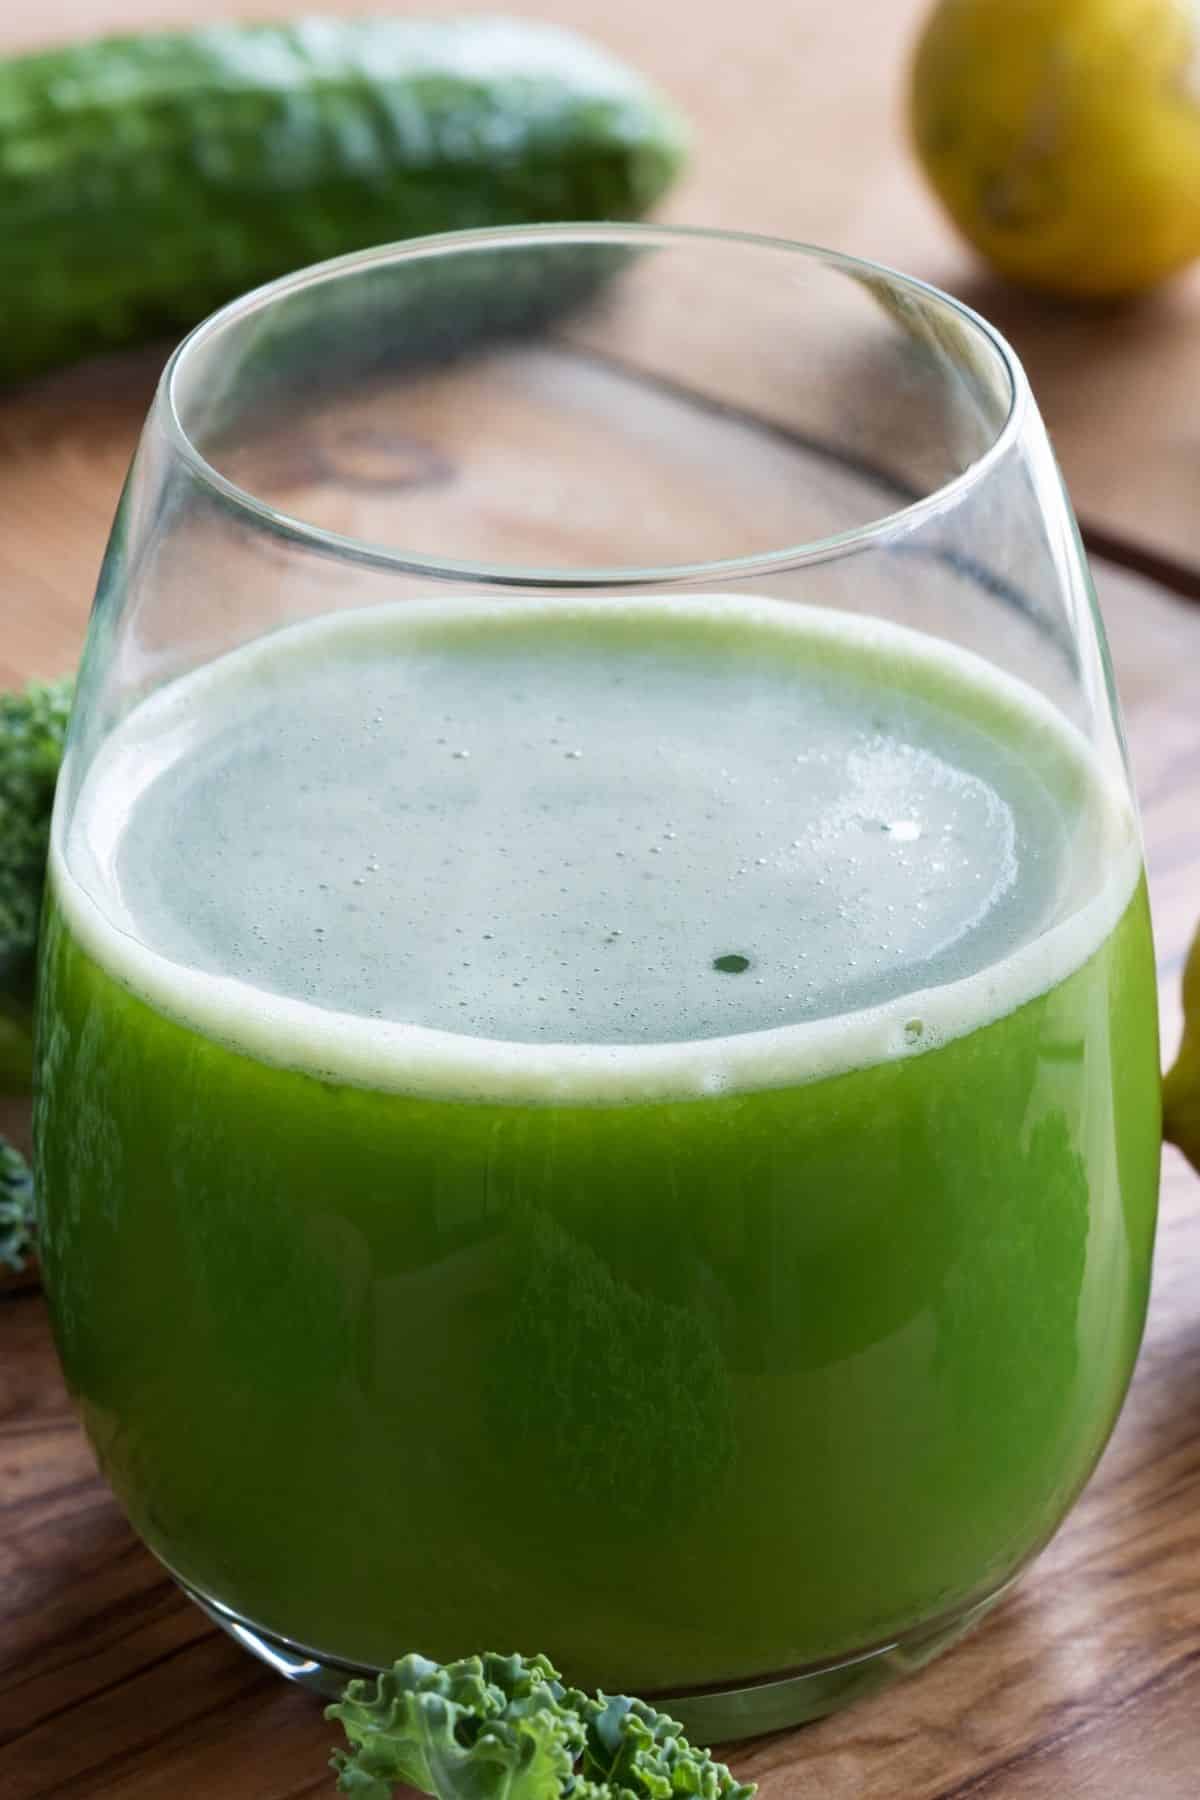 freshly juiced kale juice in glass on table.